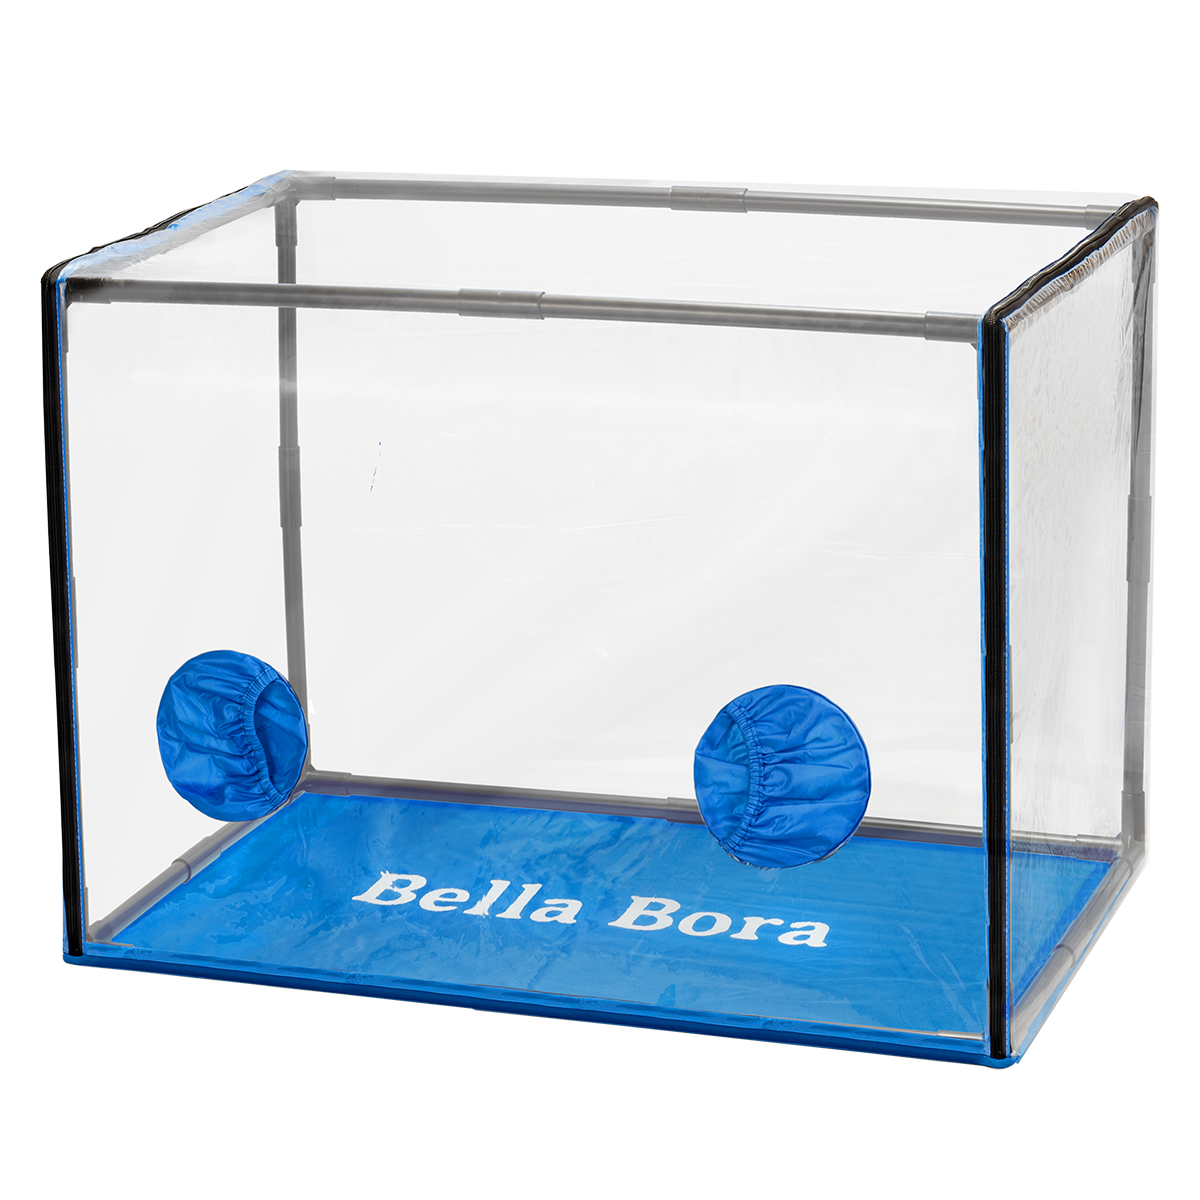 The Bella Bora Still Air Box's dual layered hand ports allow for sterile mushroom cultivation.